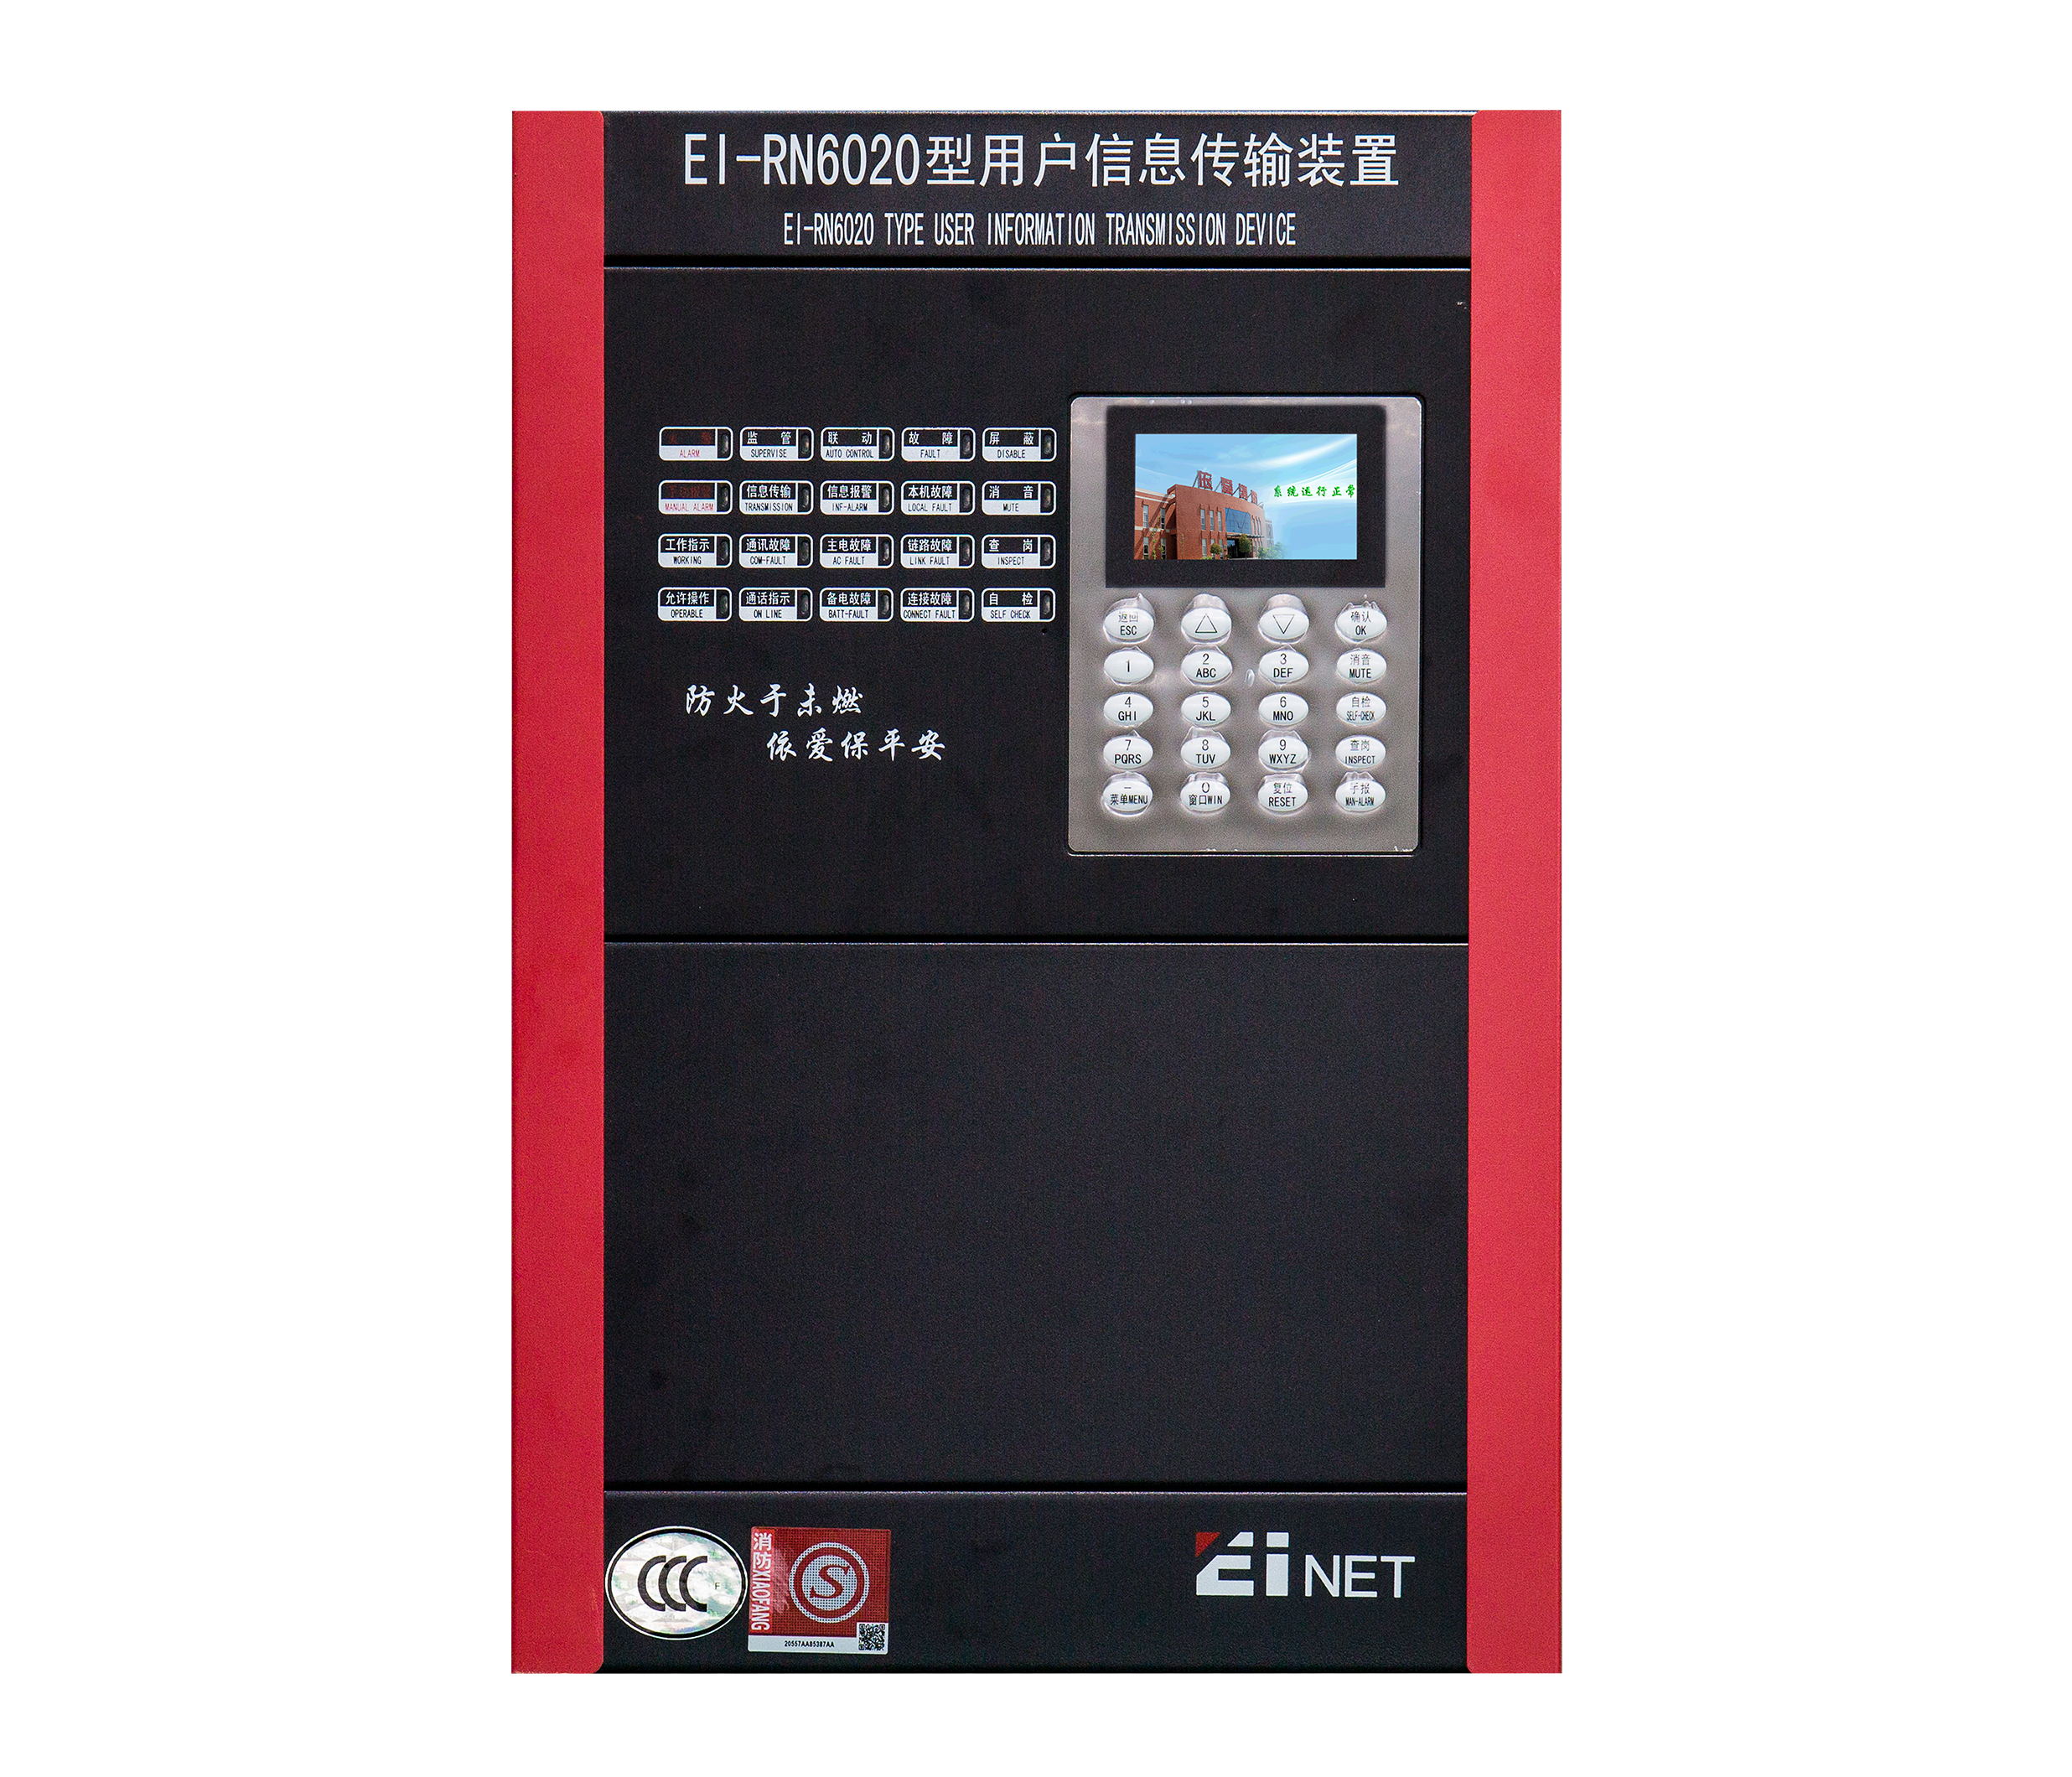 EI-RN6020用户信息传输装置